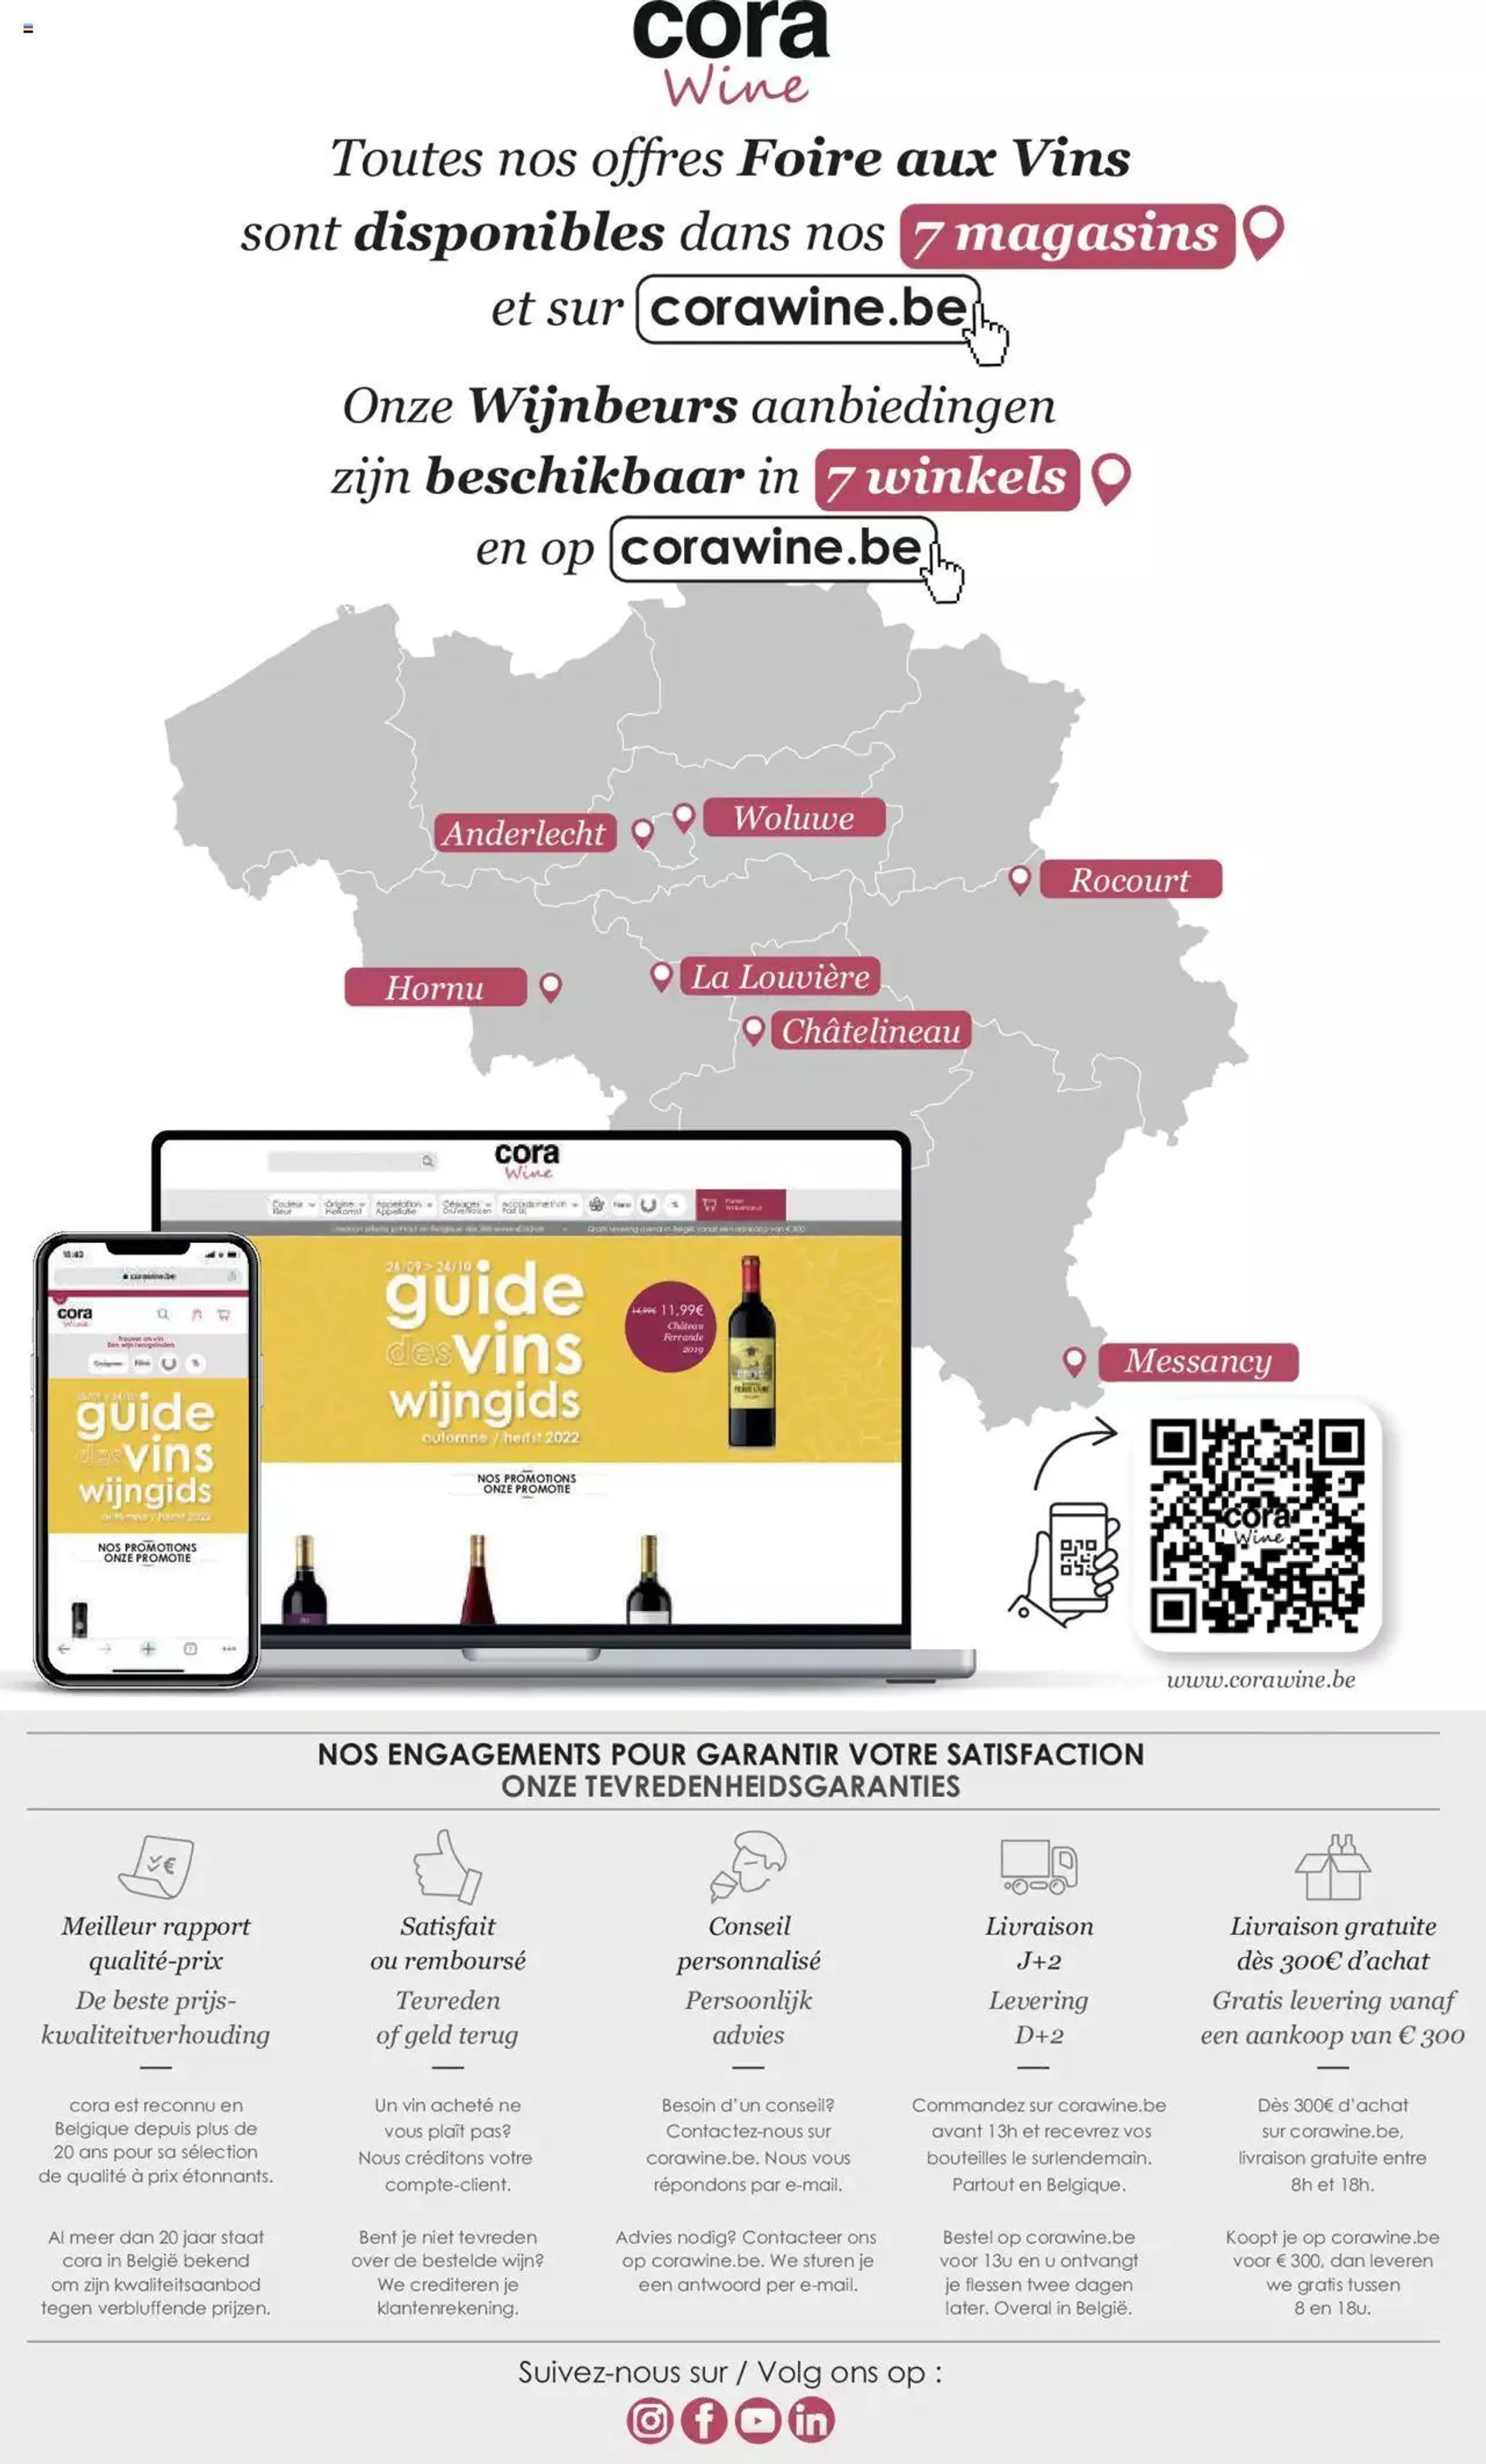 Cora - Le Guide des vins dautomne/De herfst wijngids - 2